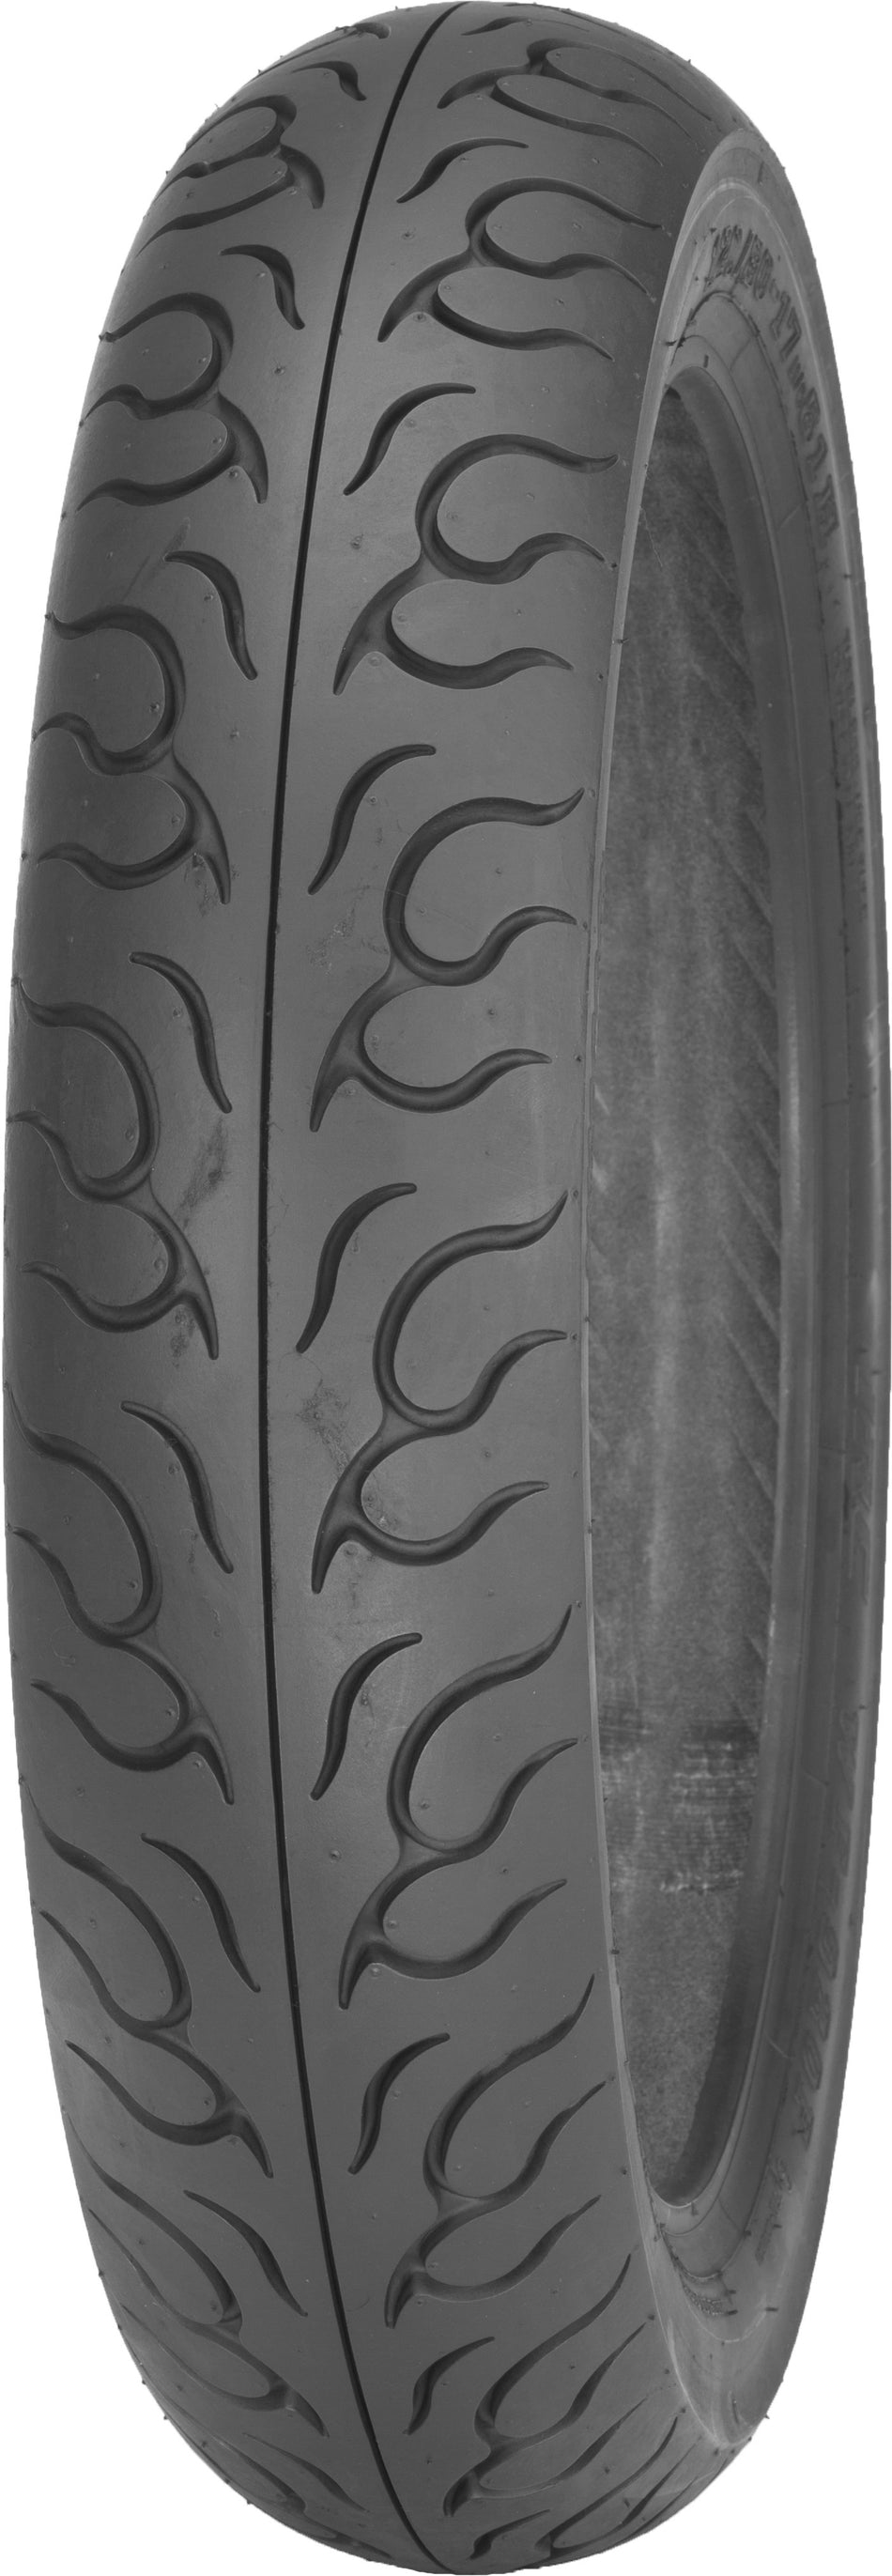 IRC Tire Wf-920 Front 130/90-16 67h Bias 302759